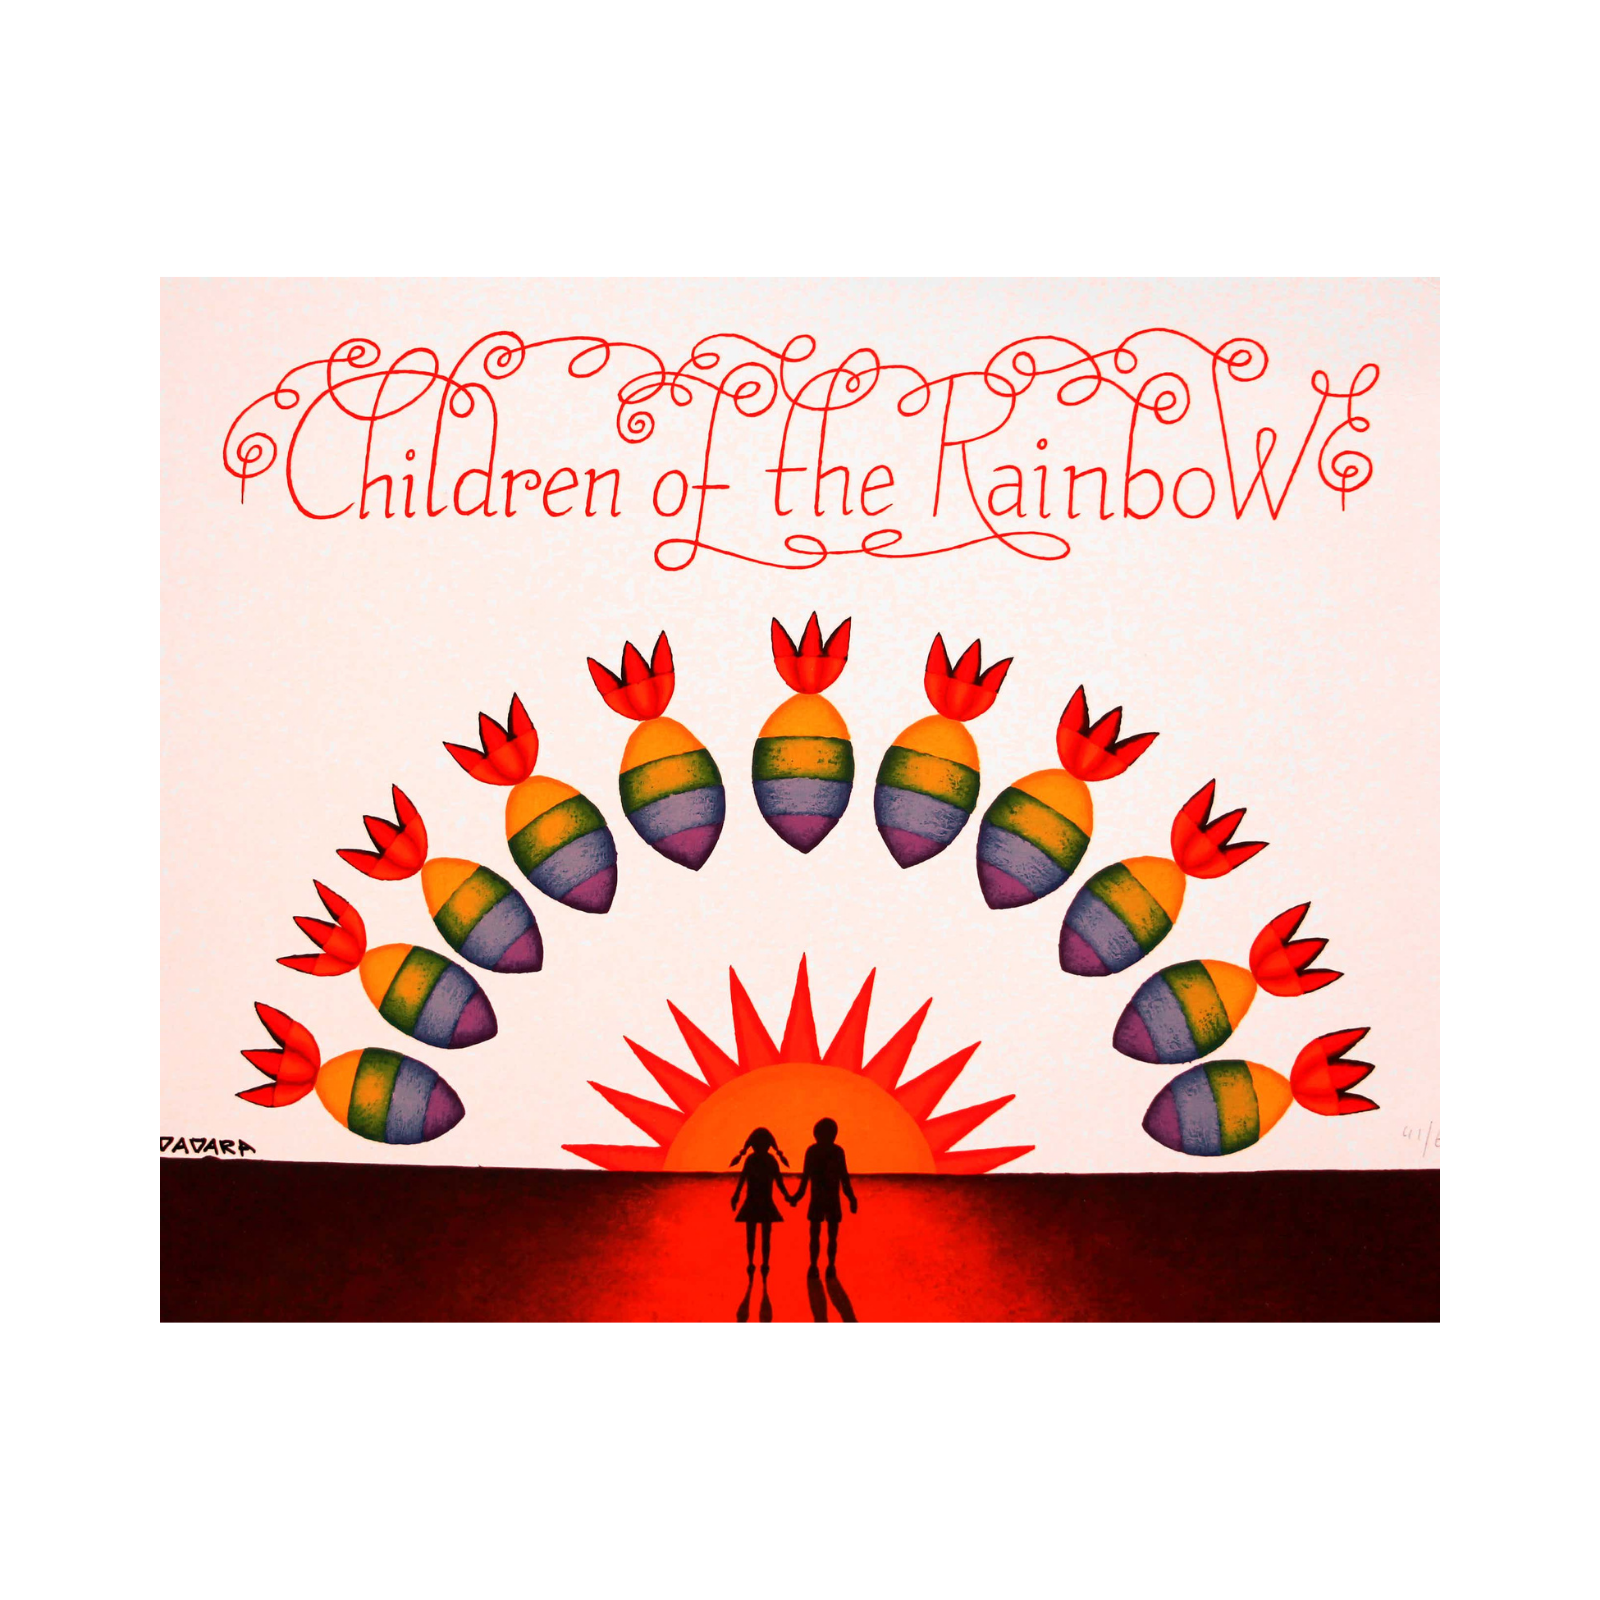 Dadara - Children of the Rainbow